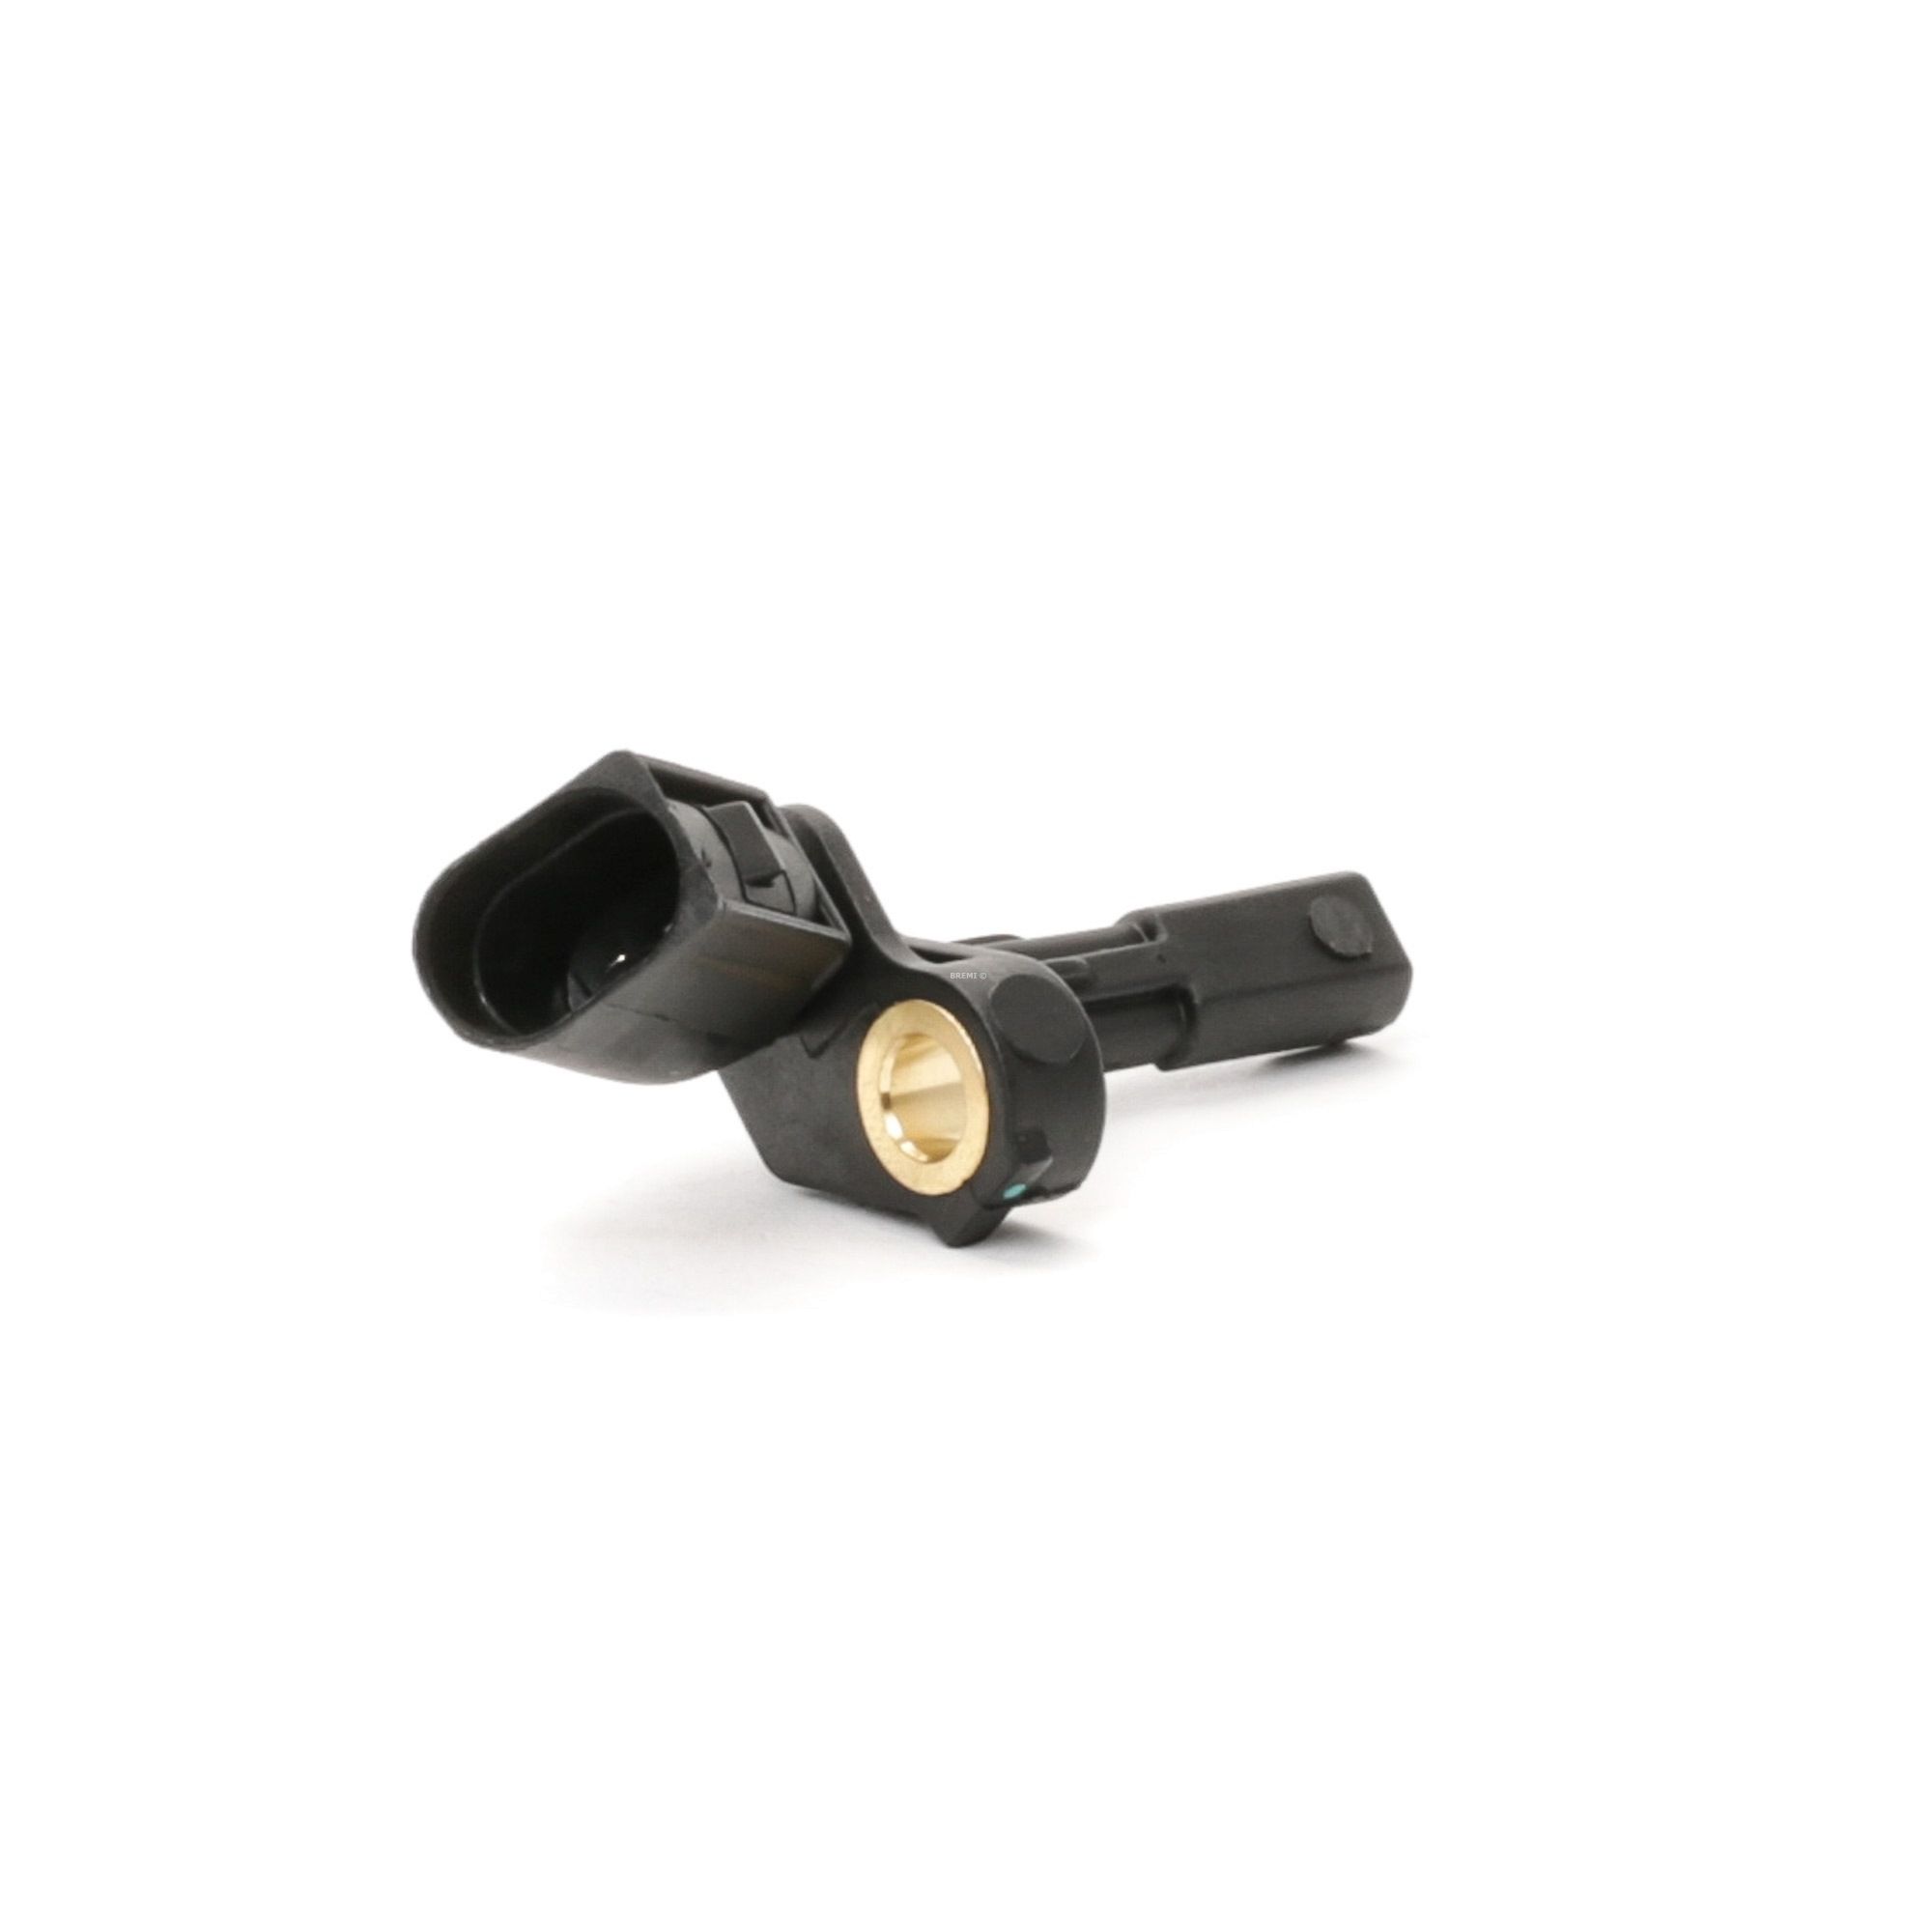 BREMI 50307 Sensor ABS de revoluciones de la rueda sin cable, negro